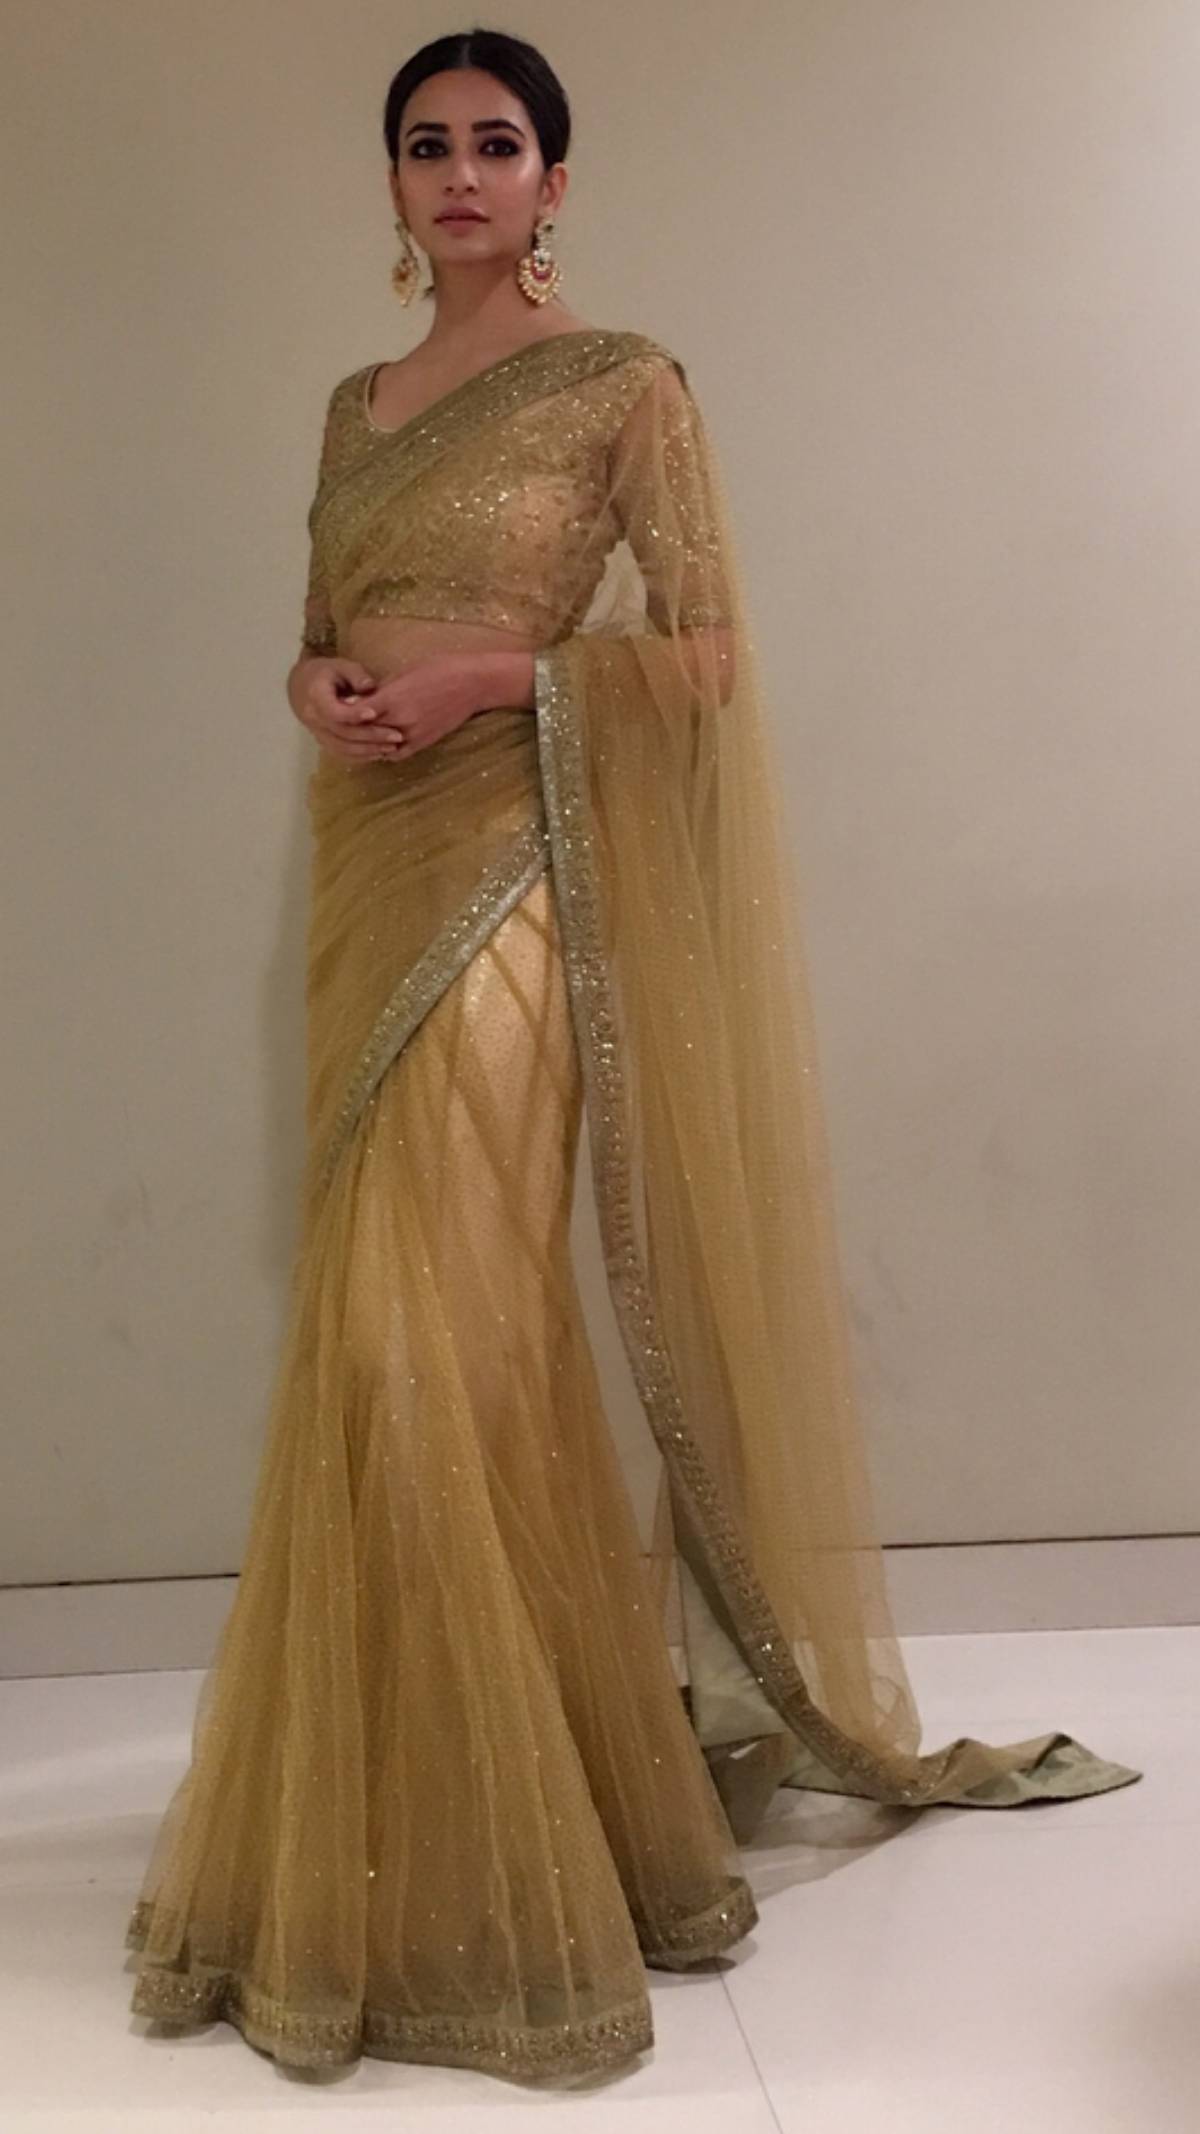 Kriti Kharbanda looks glamorous in the mustard yellow tulle saree